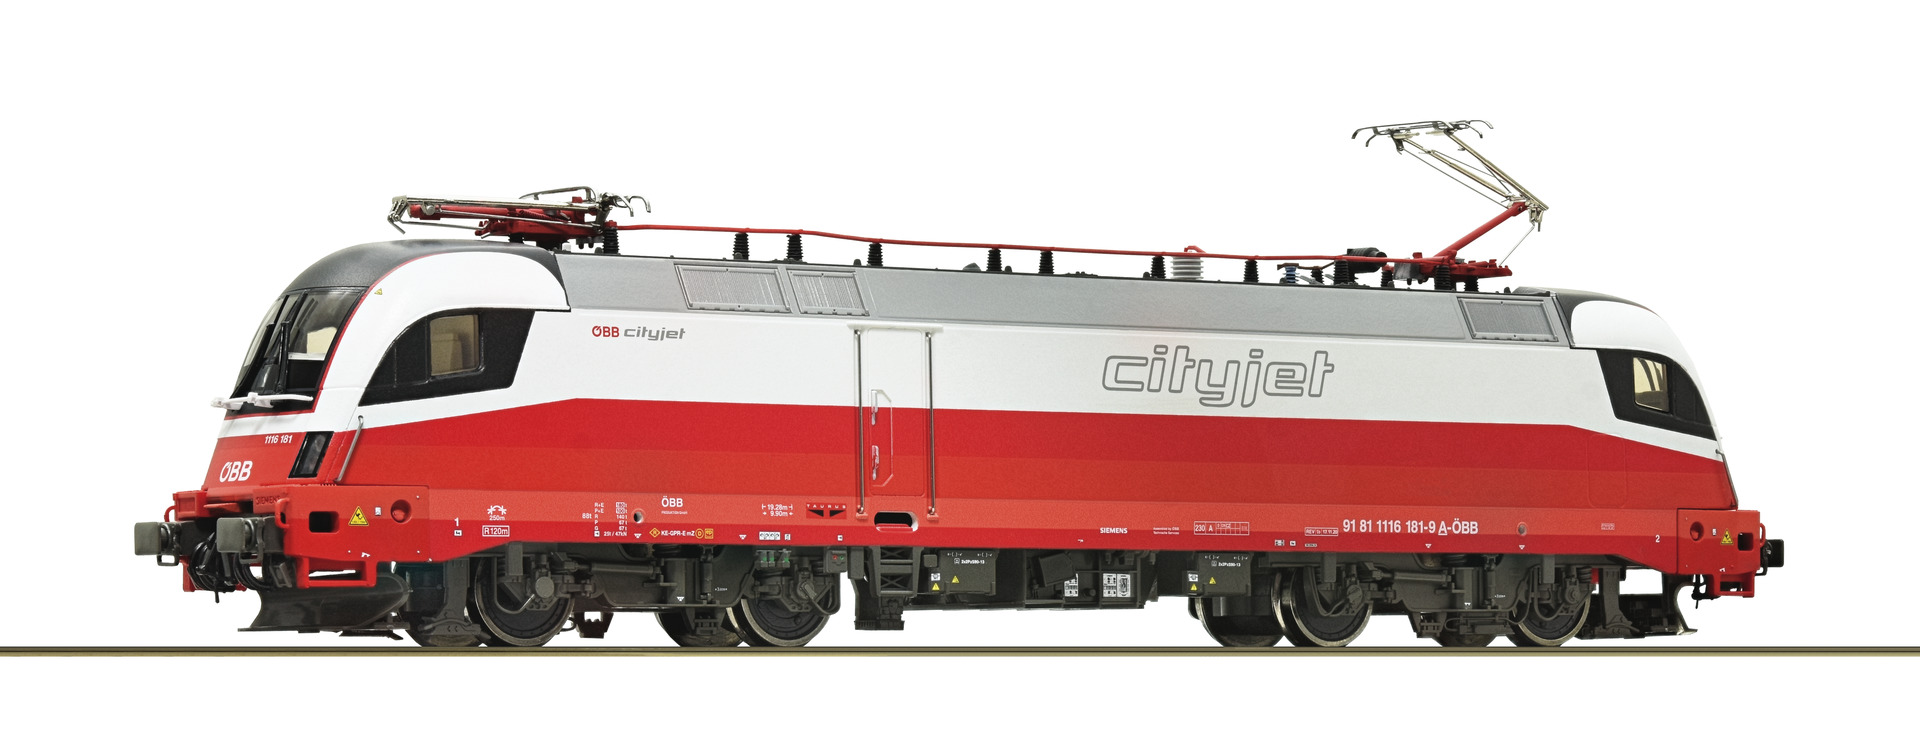 Roco 7510024  Electric locomotive 1116 181-9, ÖBB (DCC/Sound)